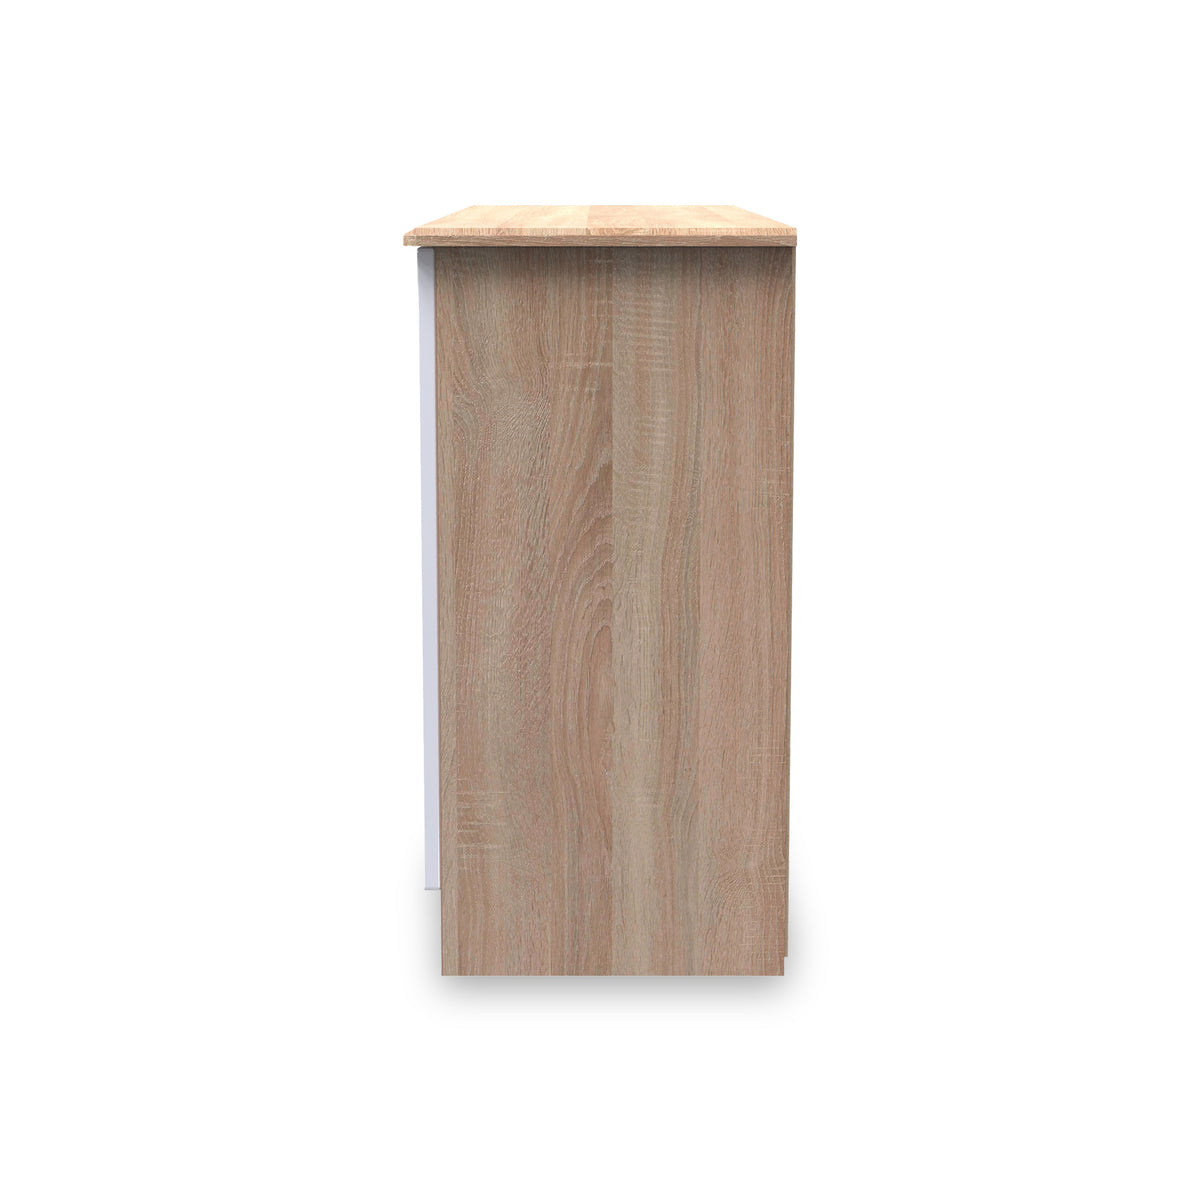 Beckett White Gloss & Light Wood 2 Door 3 Drawer Sideboard by Roseland Furniture